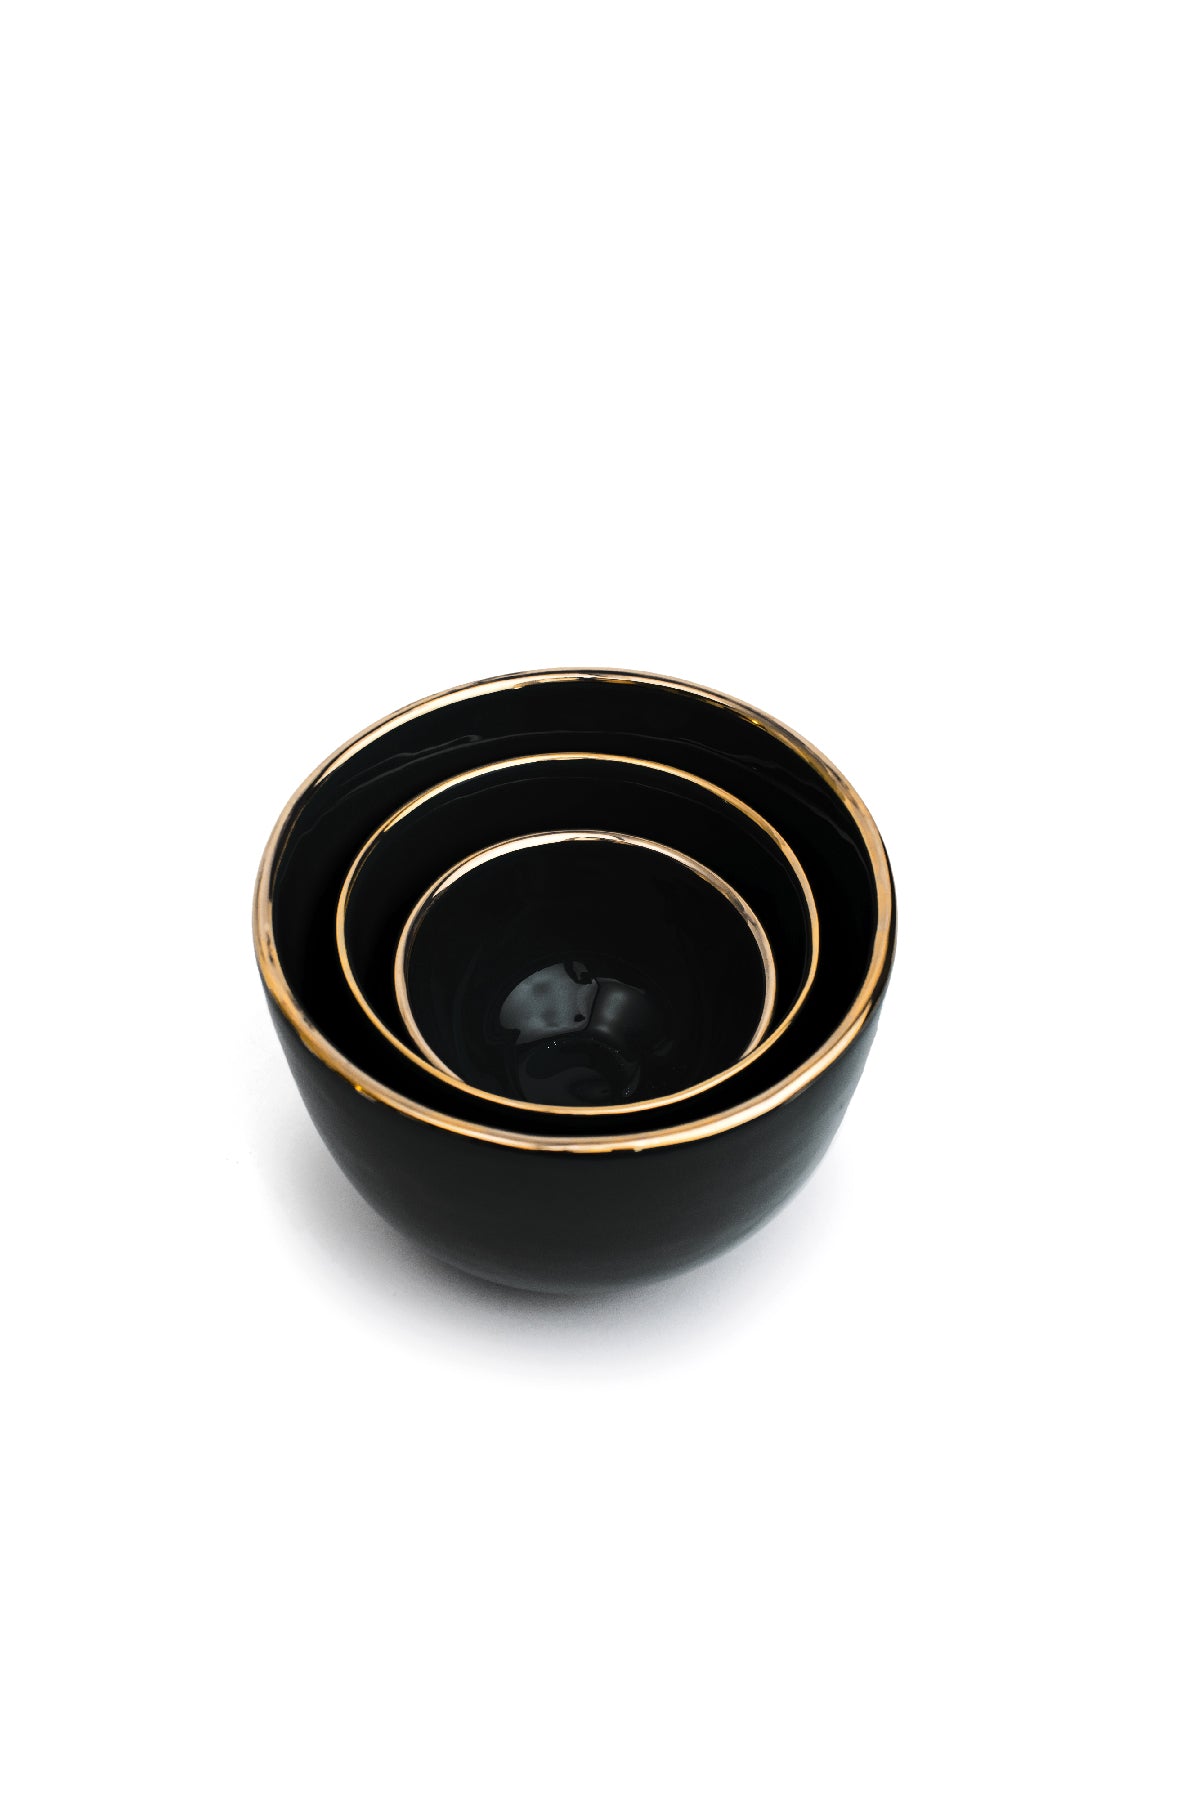 Minimalist Black Bowl with Gold Edges